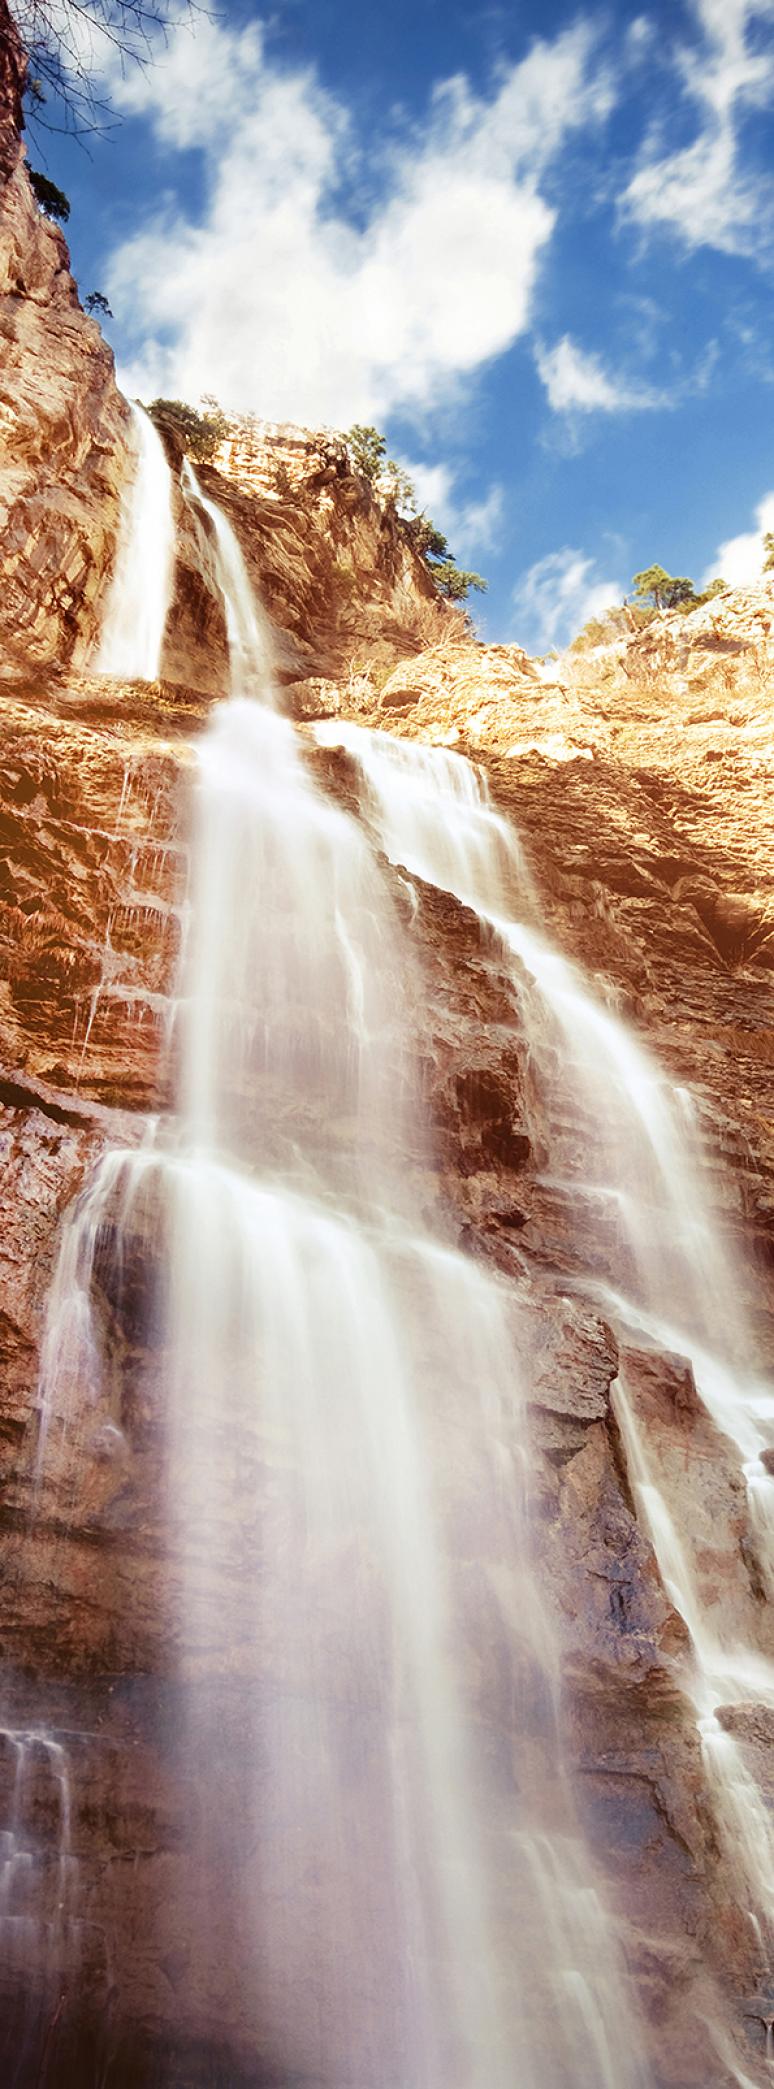 Фотообои Горный водопад А2-013 (1,0х2,7 м), Дивино Декор 1